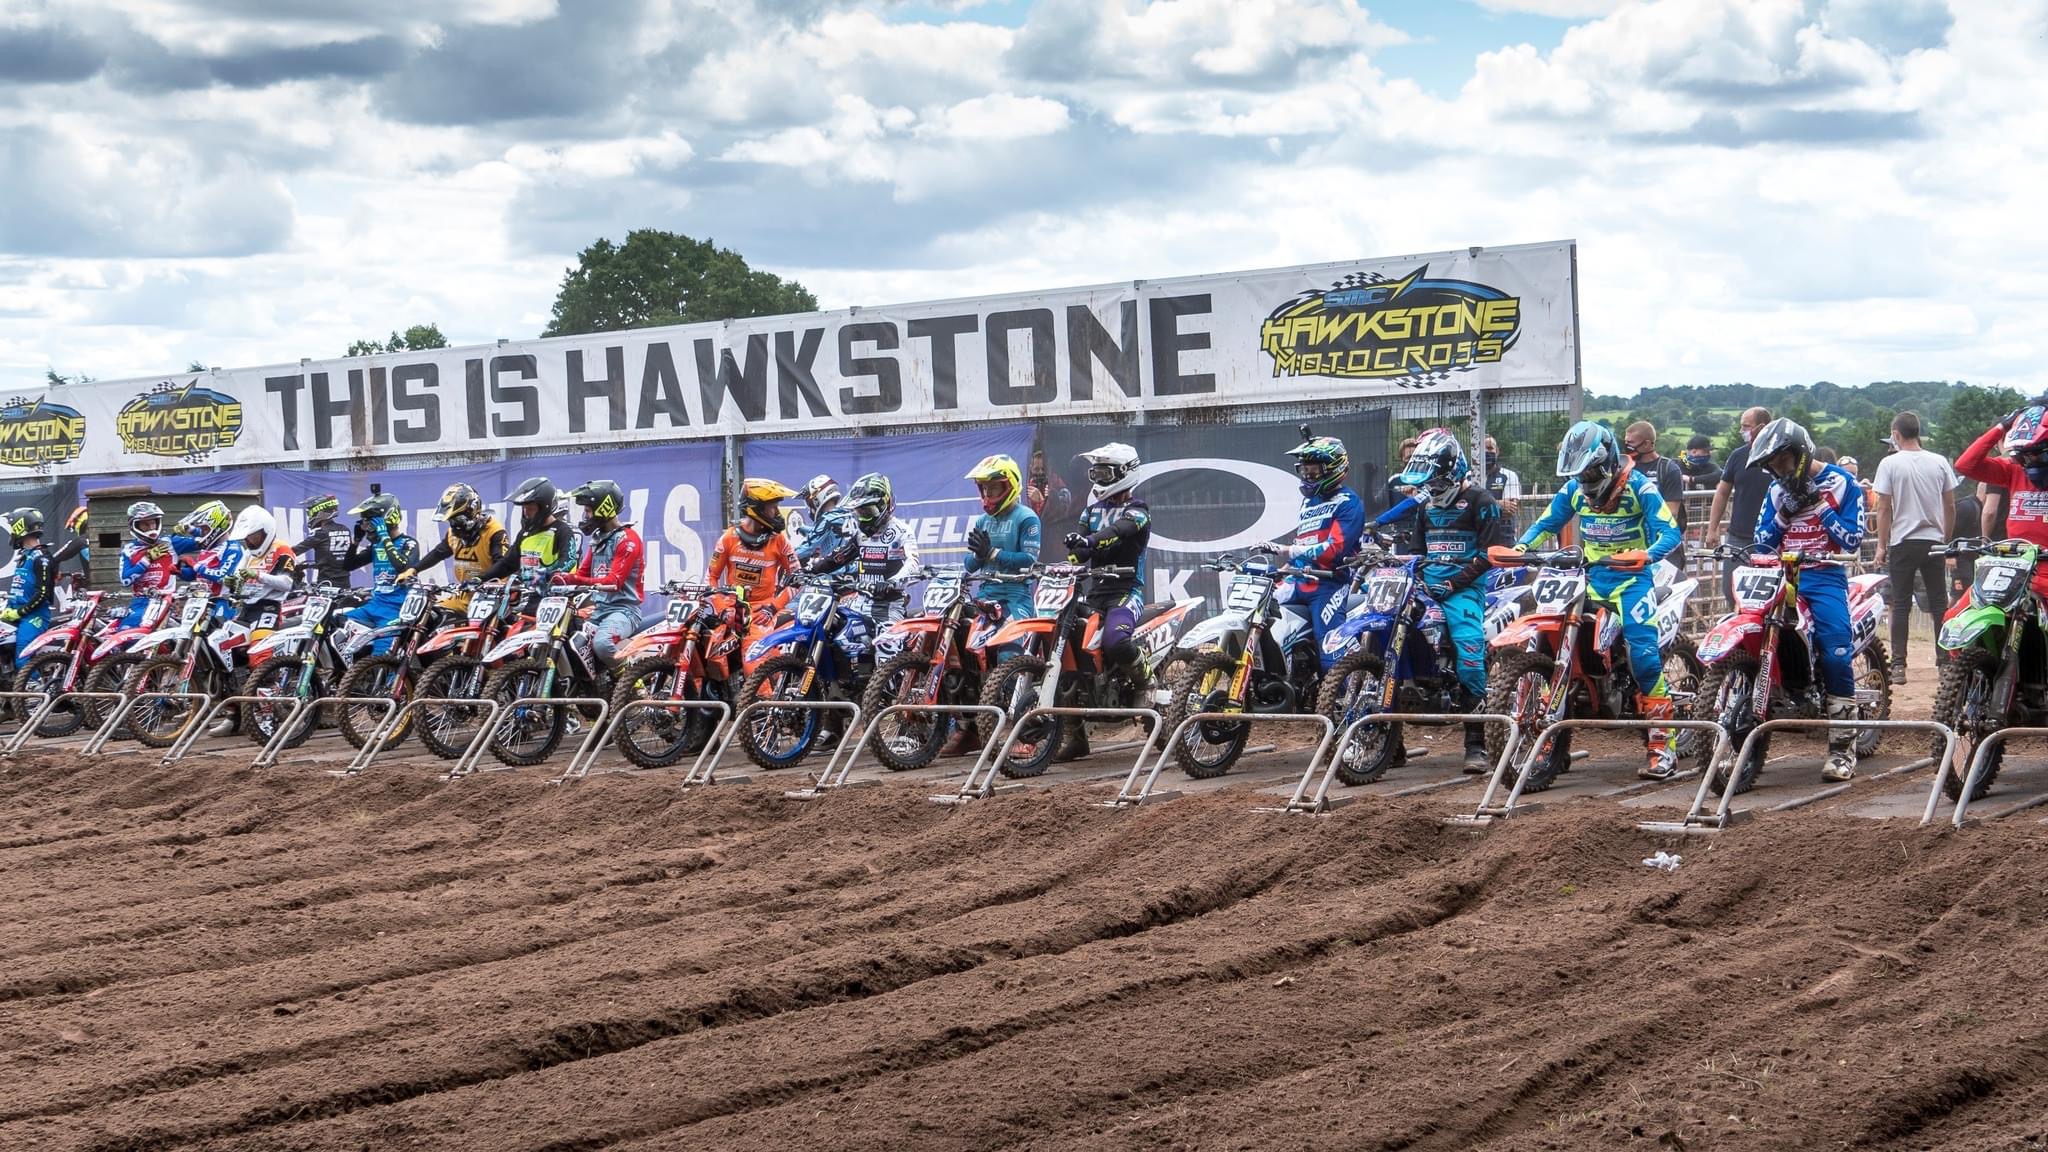 Hawkstone to host opening round of ACU 125cc 2 Stroke British Championship